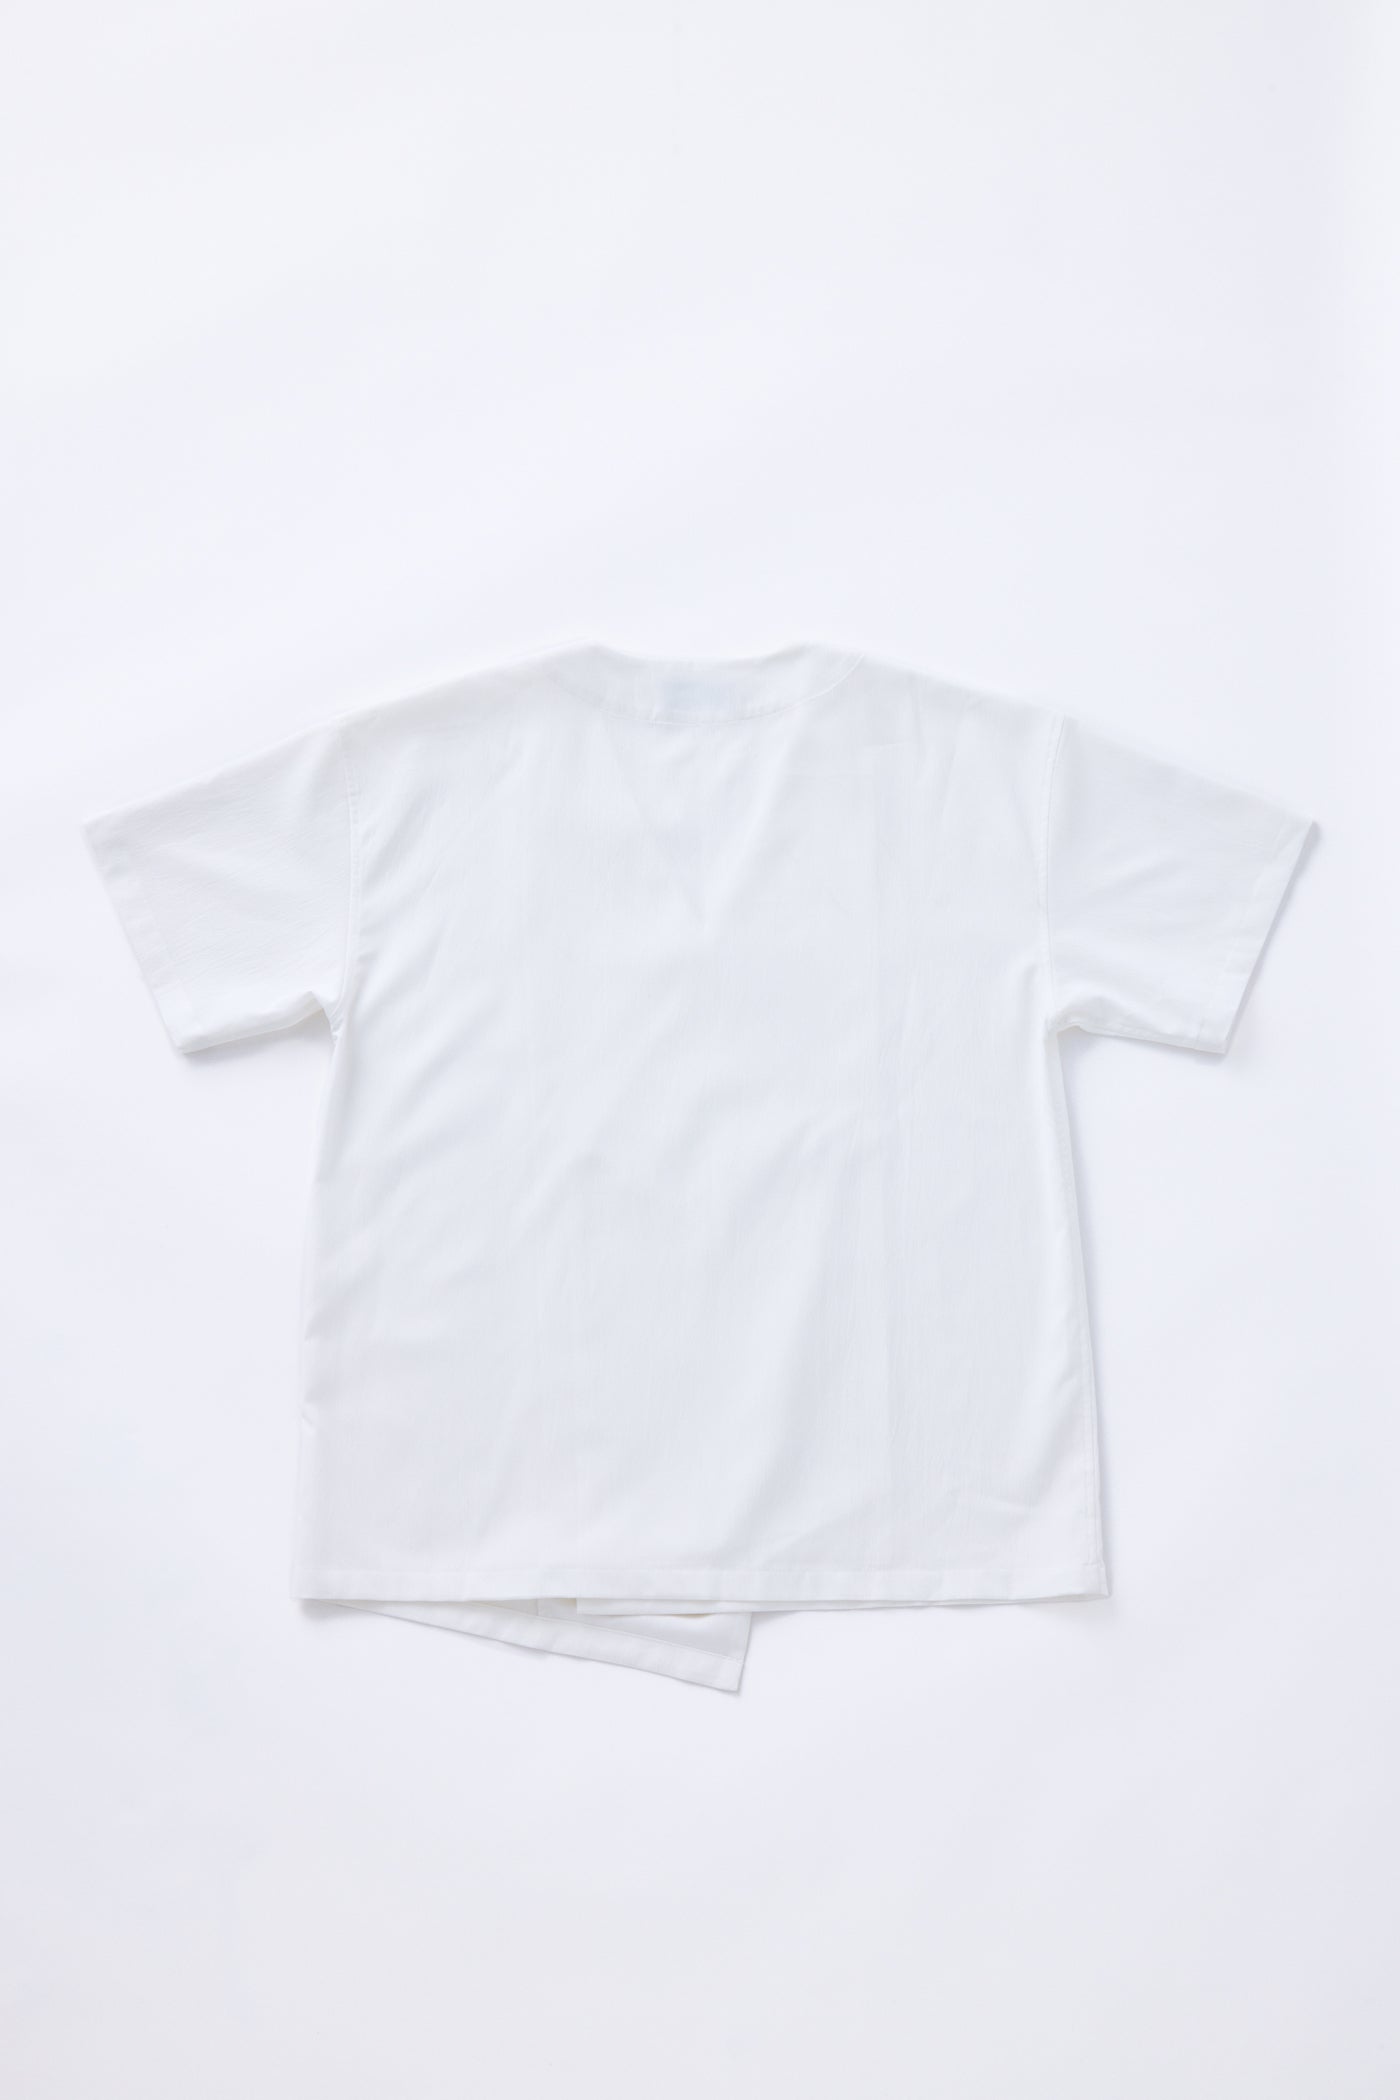 SAMUE S/S Shirt